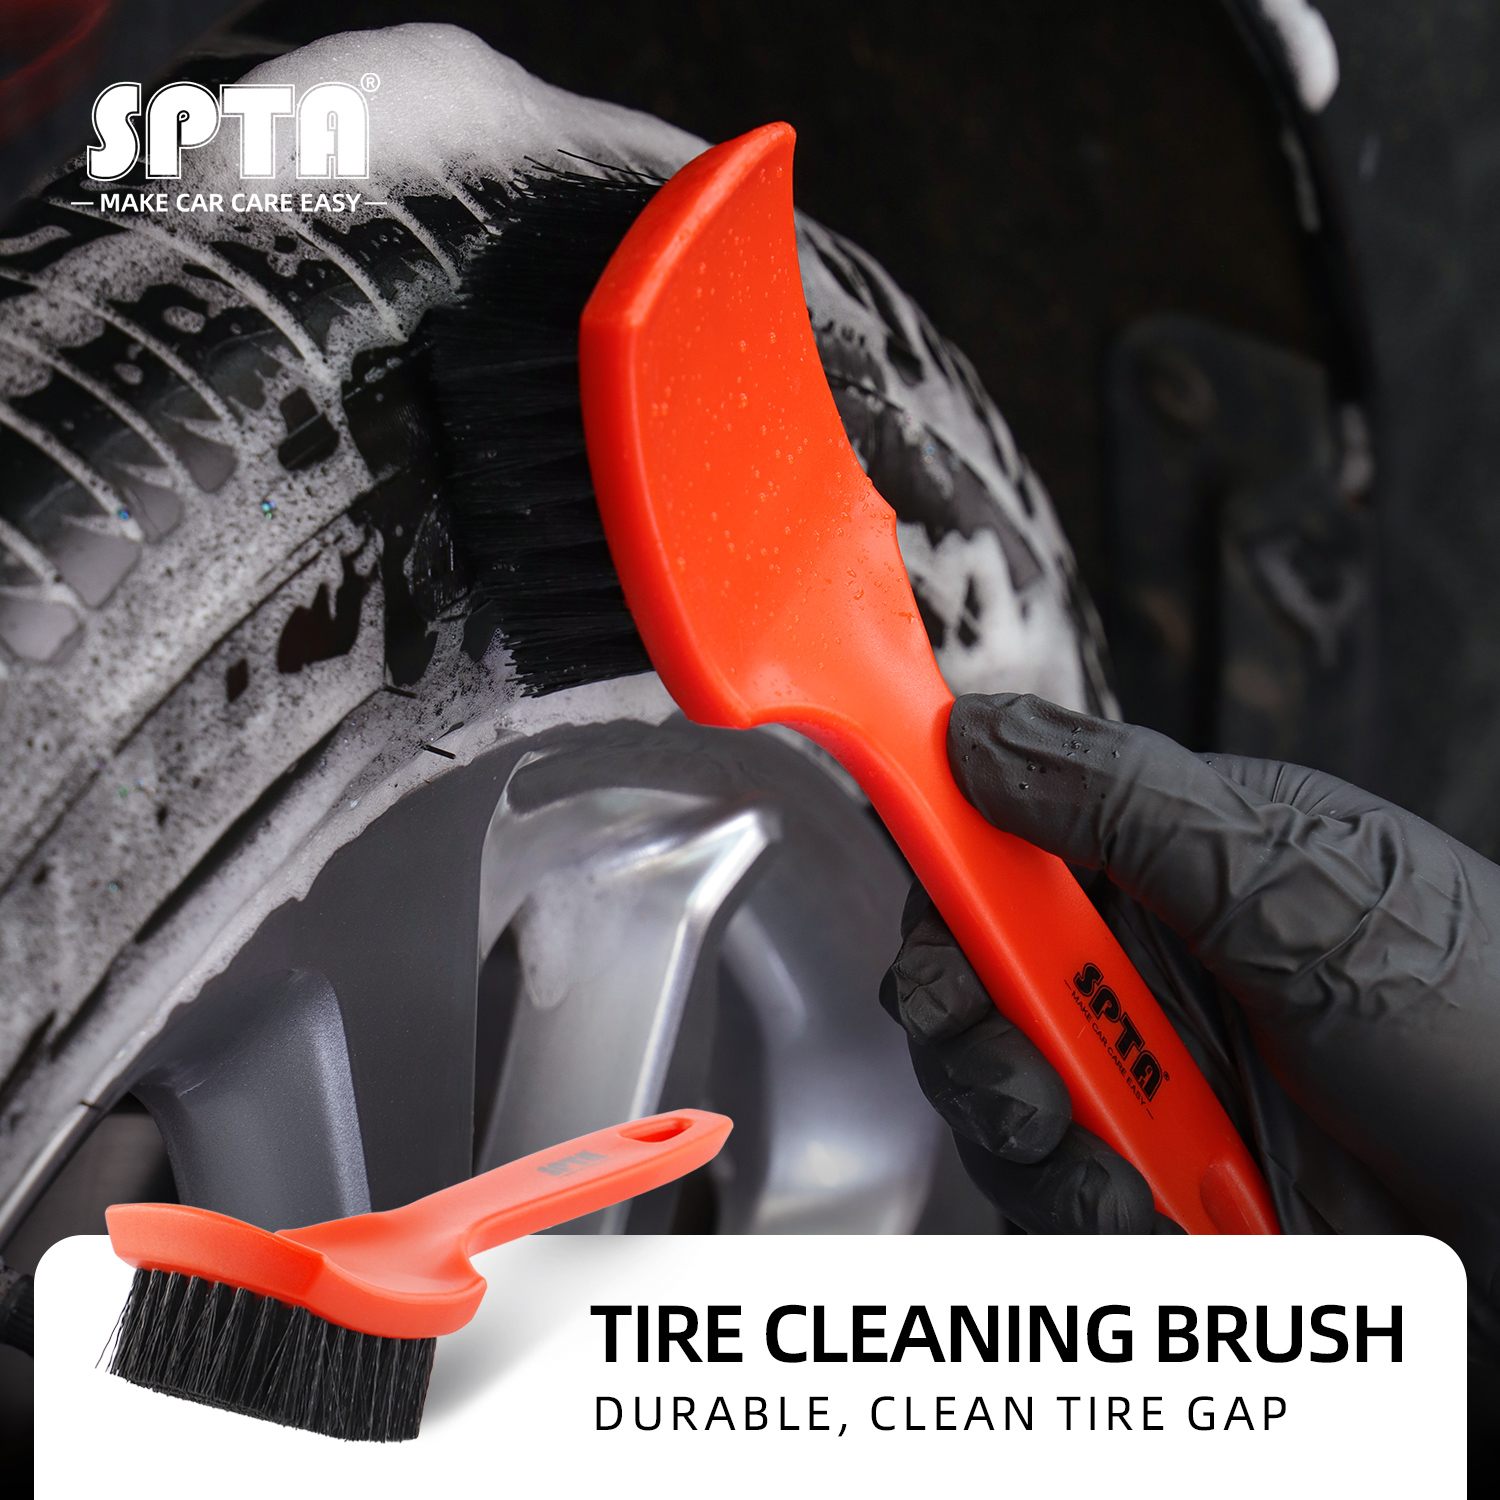 China 15 Pcs Car Detailing Brush Set,Car Interior Cleaning Kit Includes Detail Brushes, Wheel Brush, Wheel Tire Brush Kit, Other